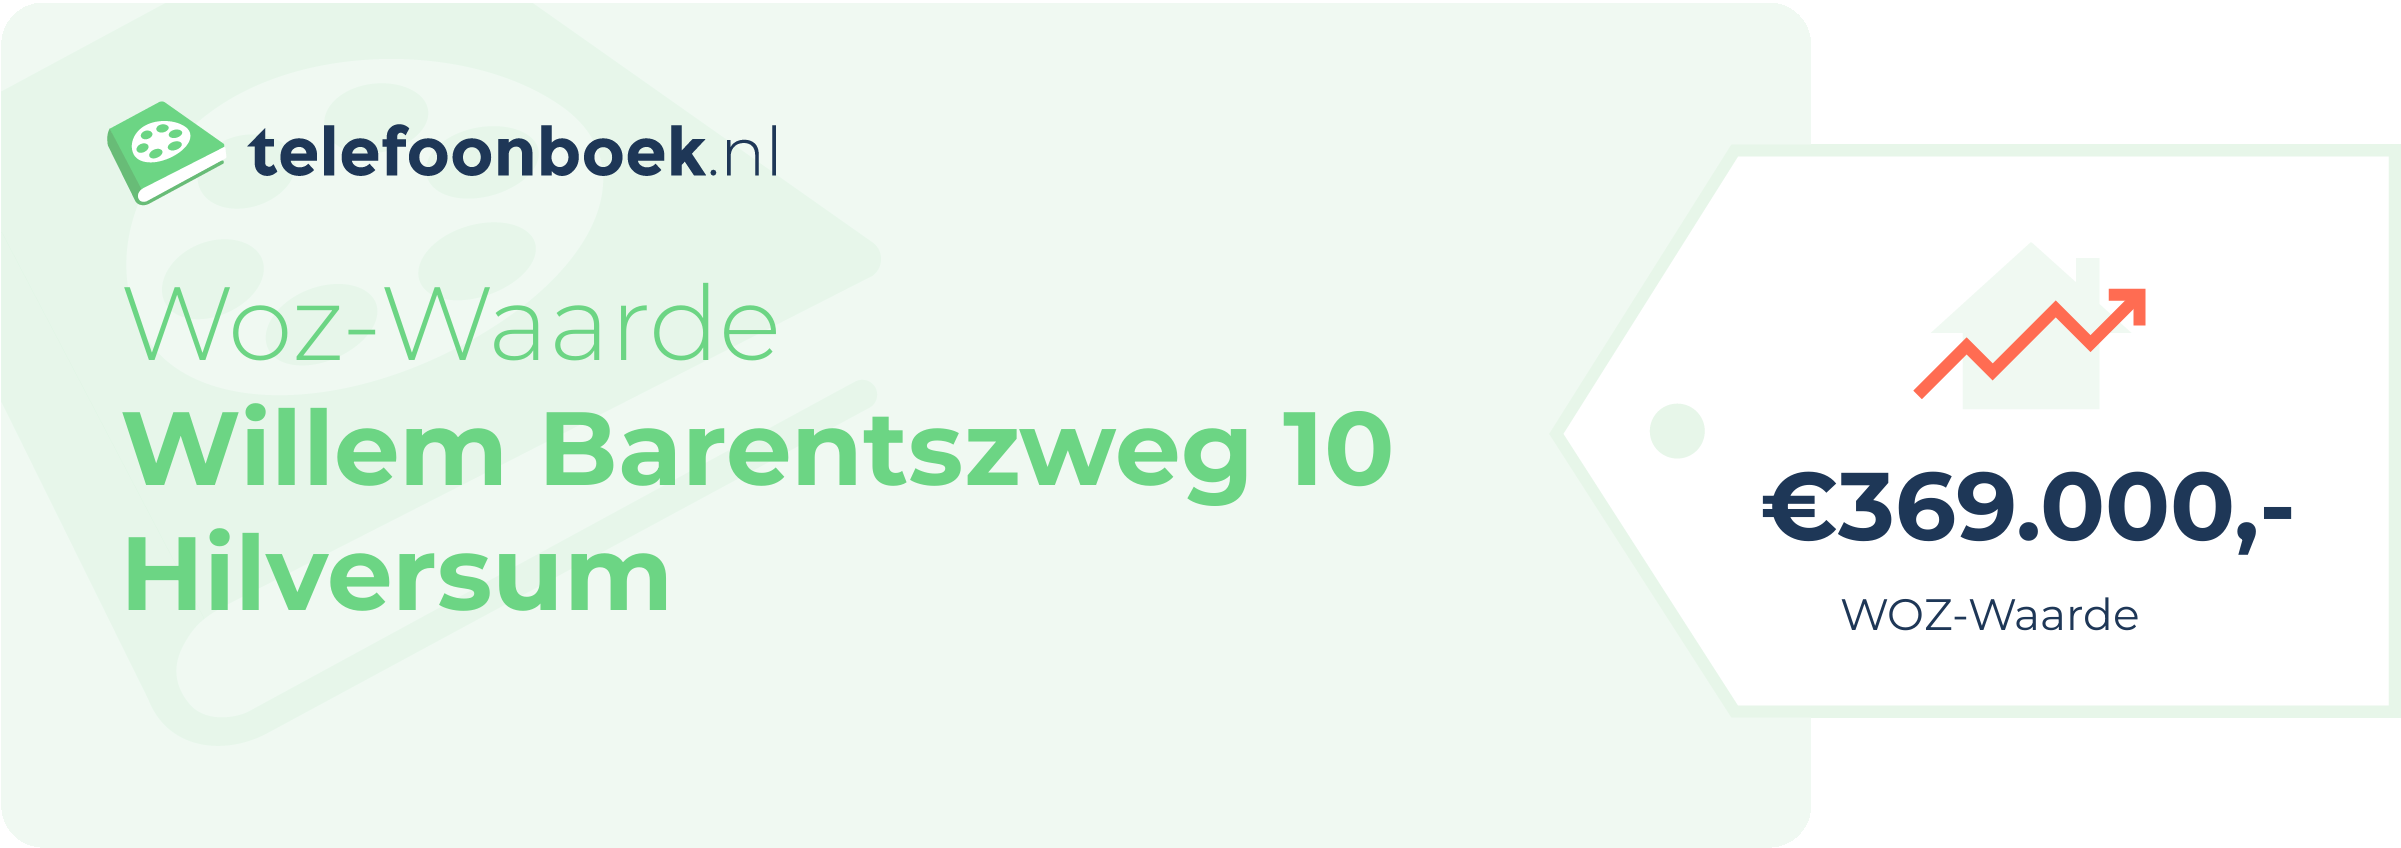 WOZ-waarde Willem Barentszweg 10 Hilversum